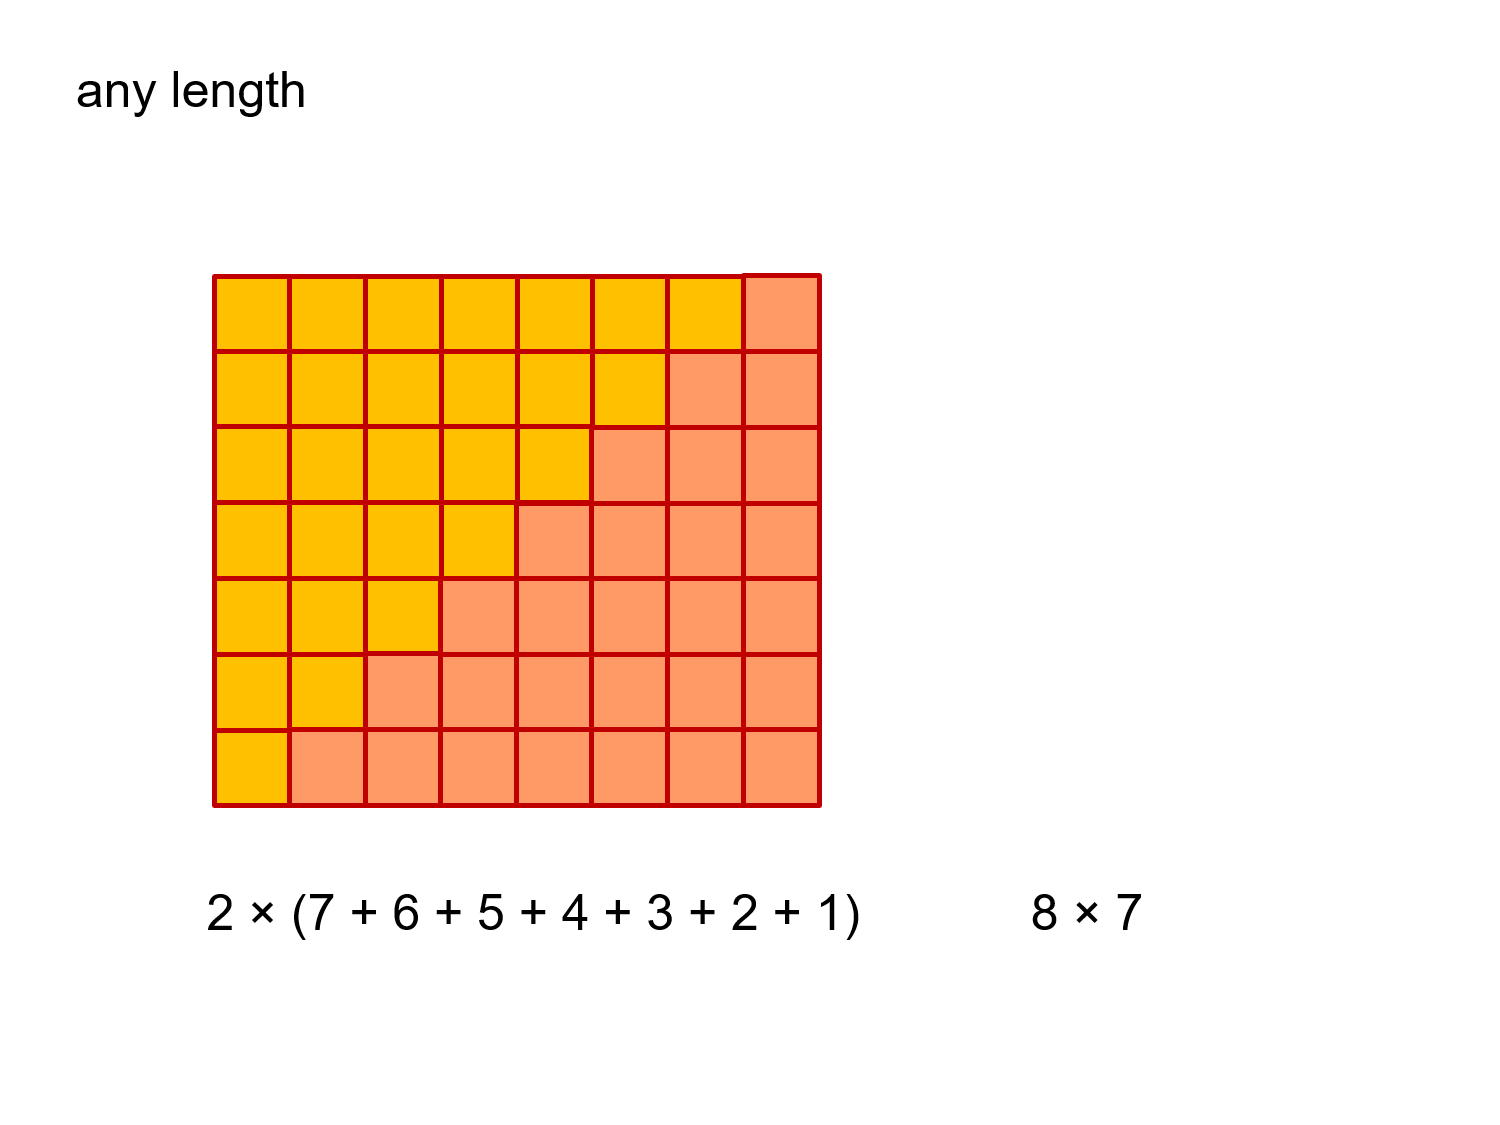 median-don-steward-mathematics-teaching-triangular-numbers